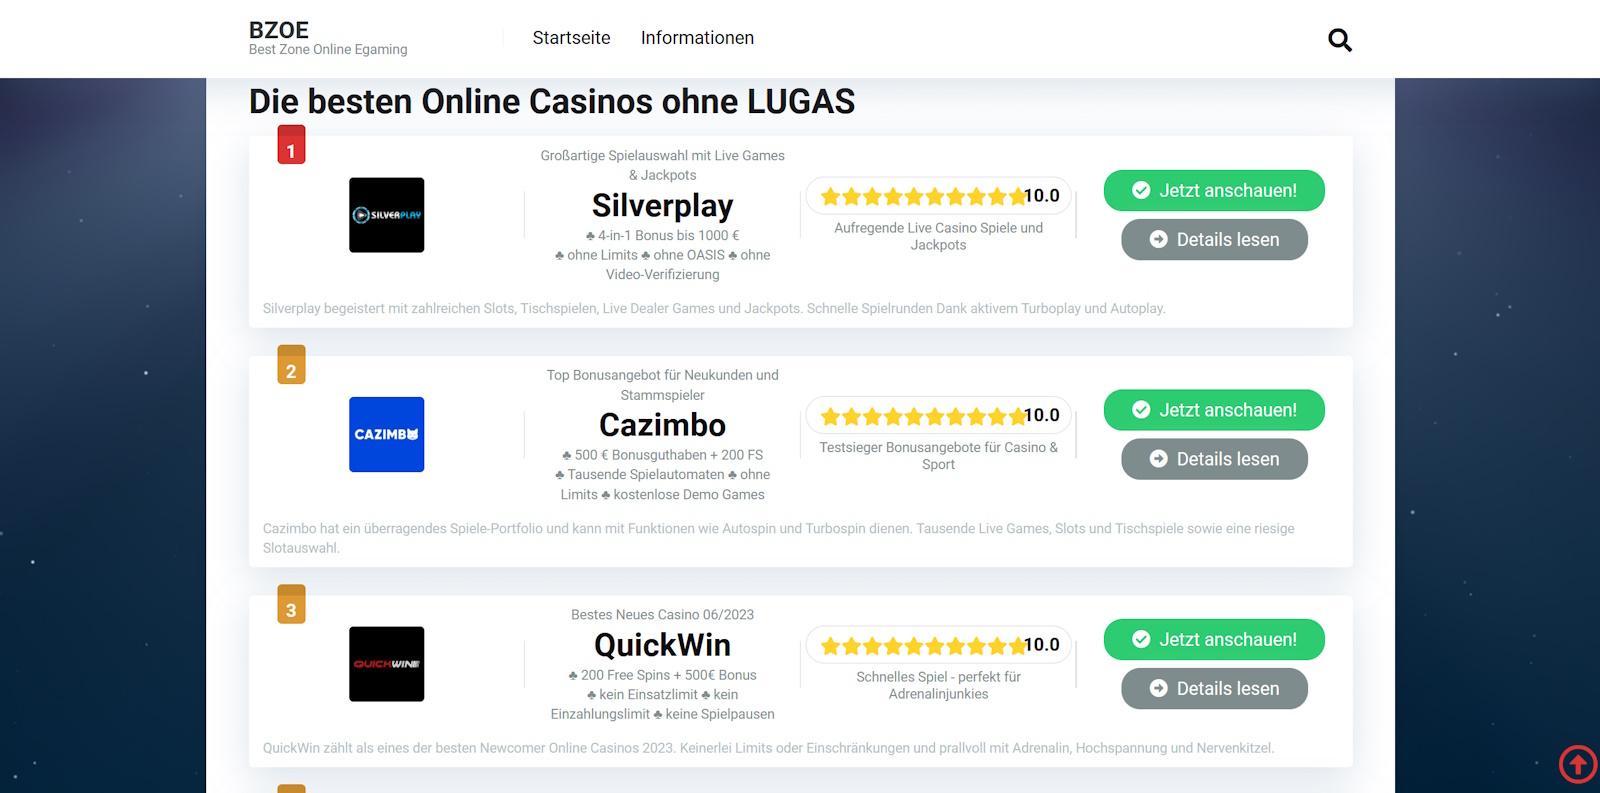 Top10 Online Casinos ohne Lugas